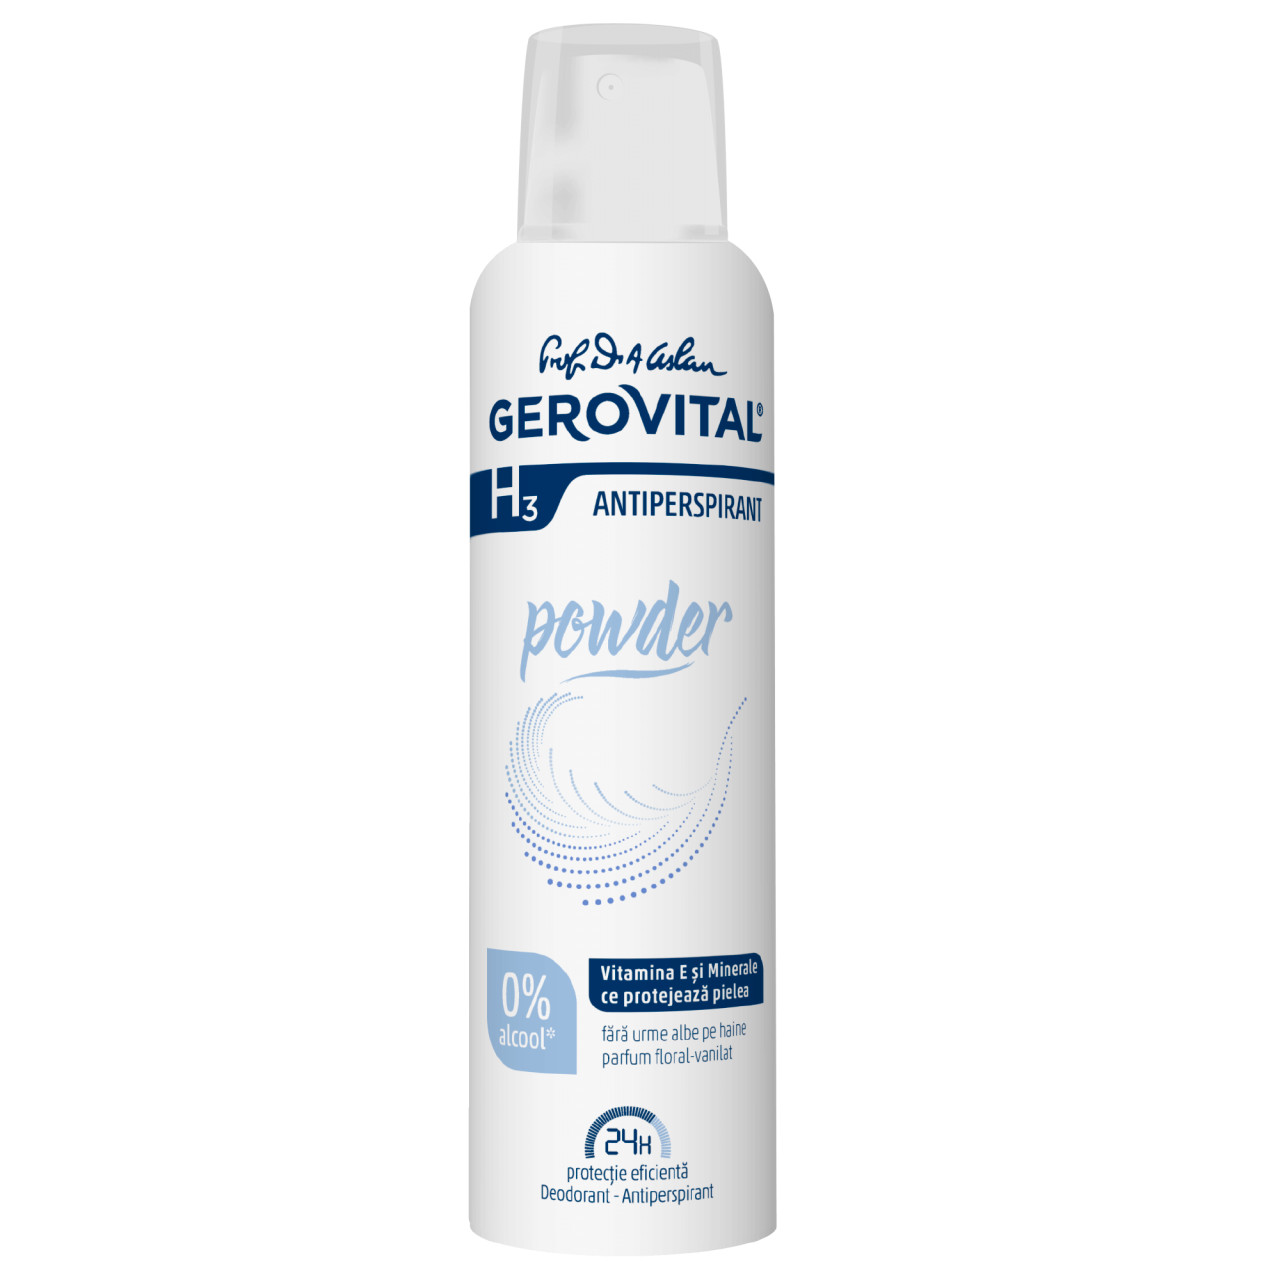 Gerovital H3 Deodorant Antiperspirant Powder - 150 ml